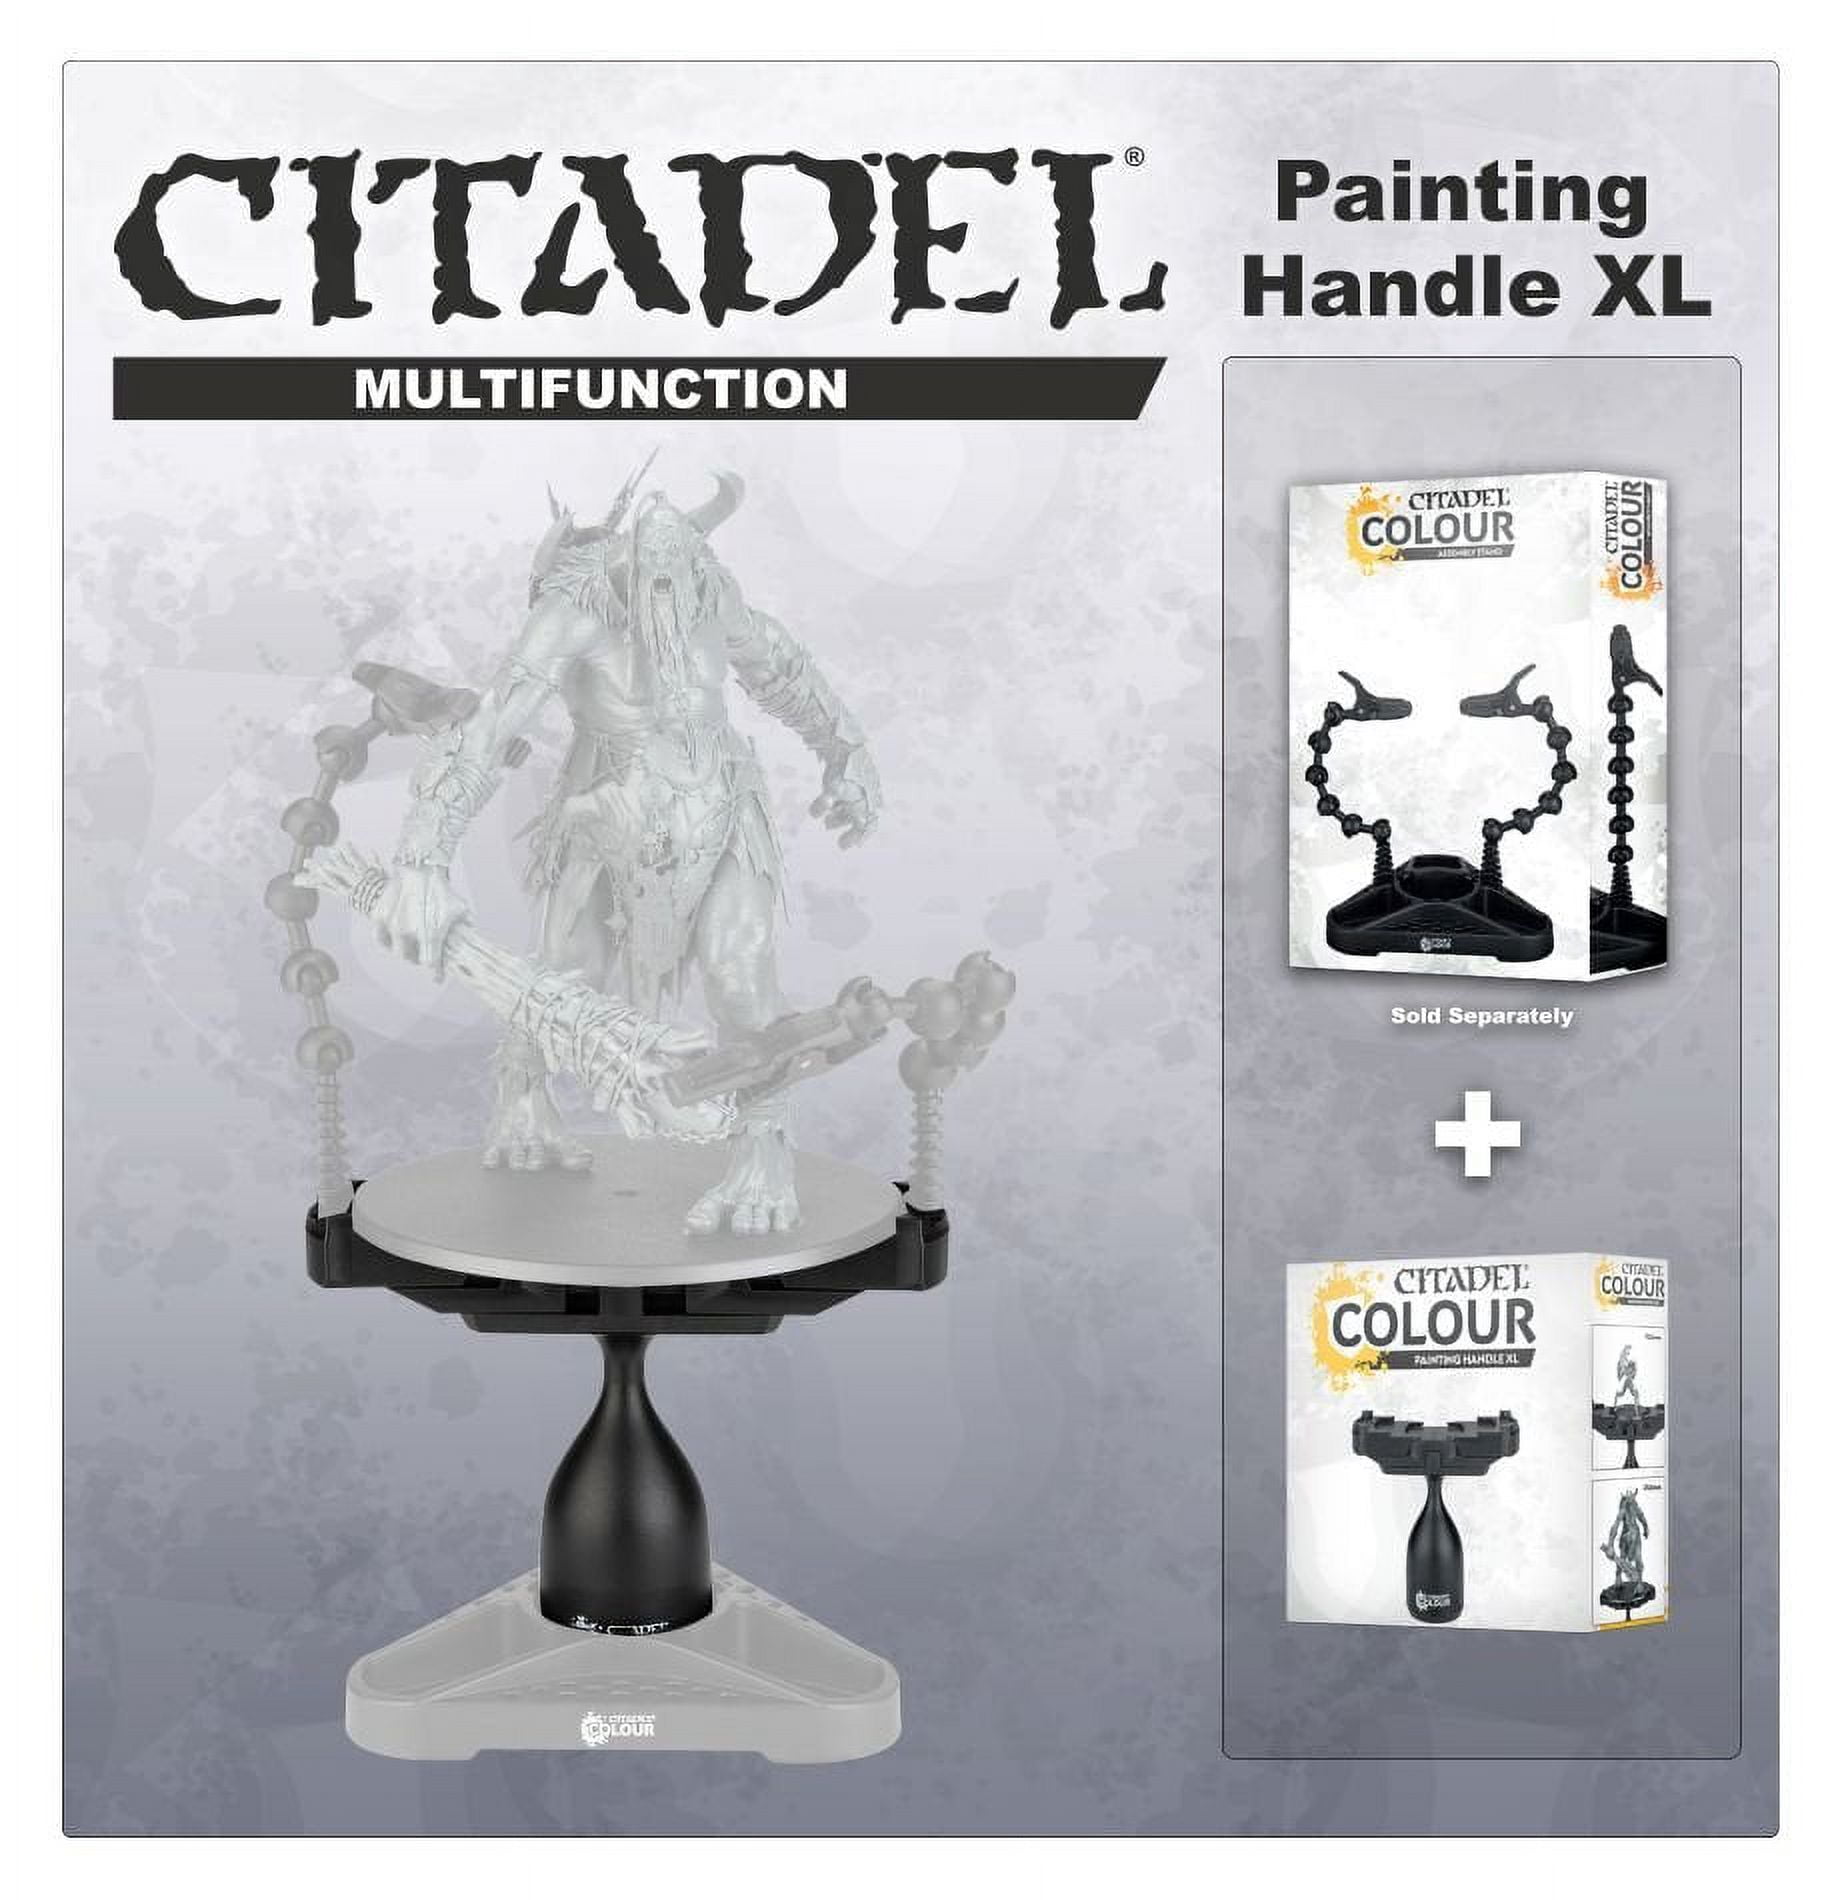 Citadel Painting Handles Review 